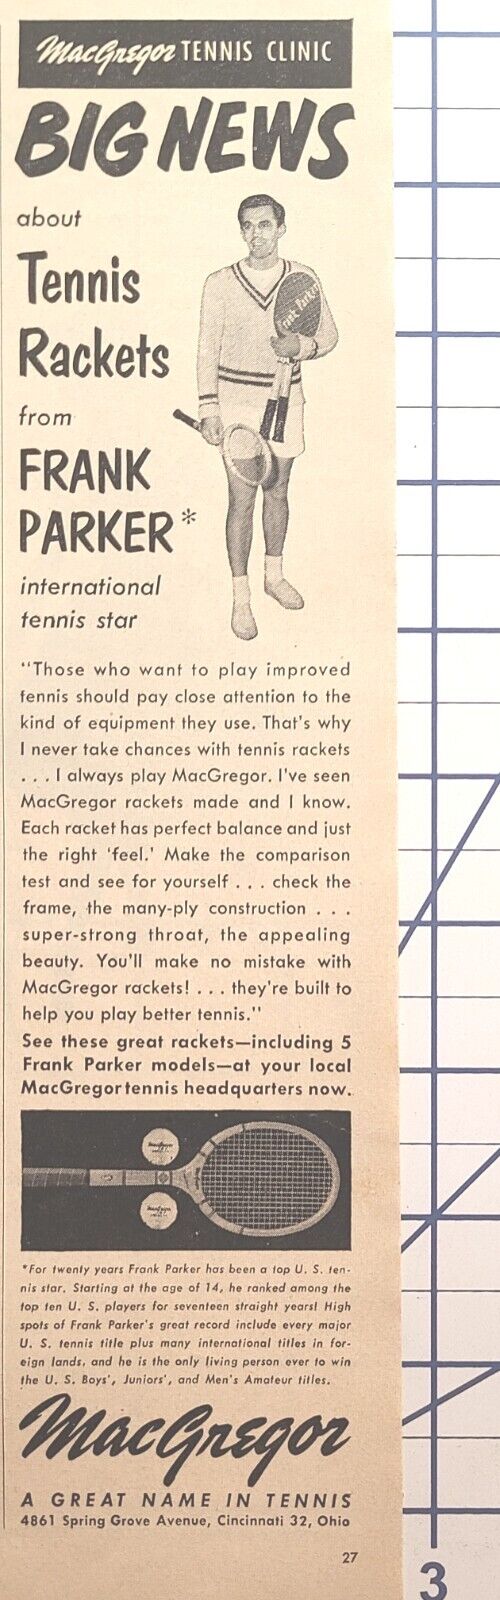 MacGregor Tennis Rackets Frank Parker Star 5 Models Clinic Vintage Print Ad 1952